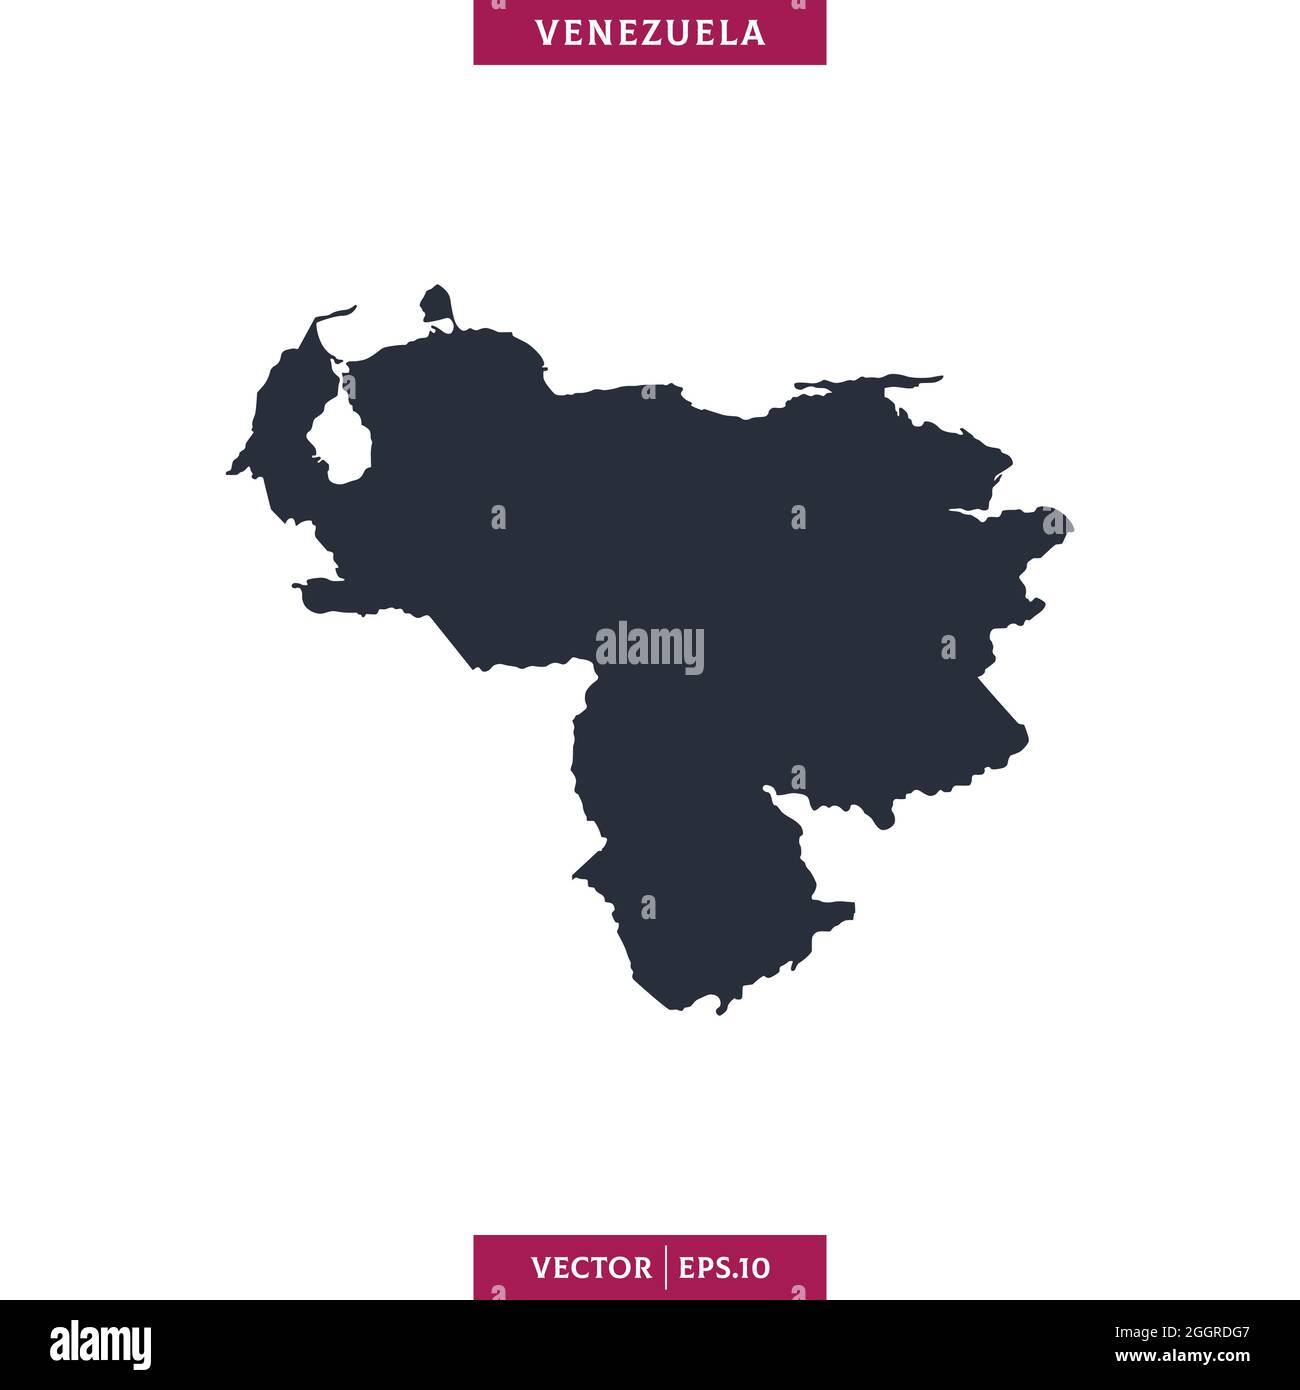 Detailed map of Venezuela vector stock illustration design template. Vector eps 10. Stock Vector